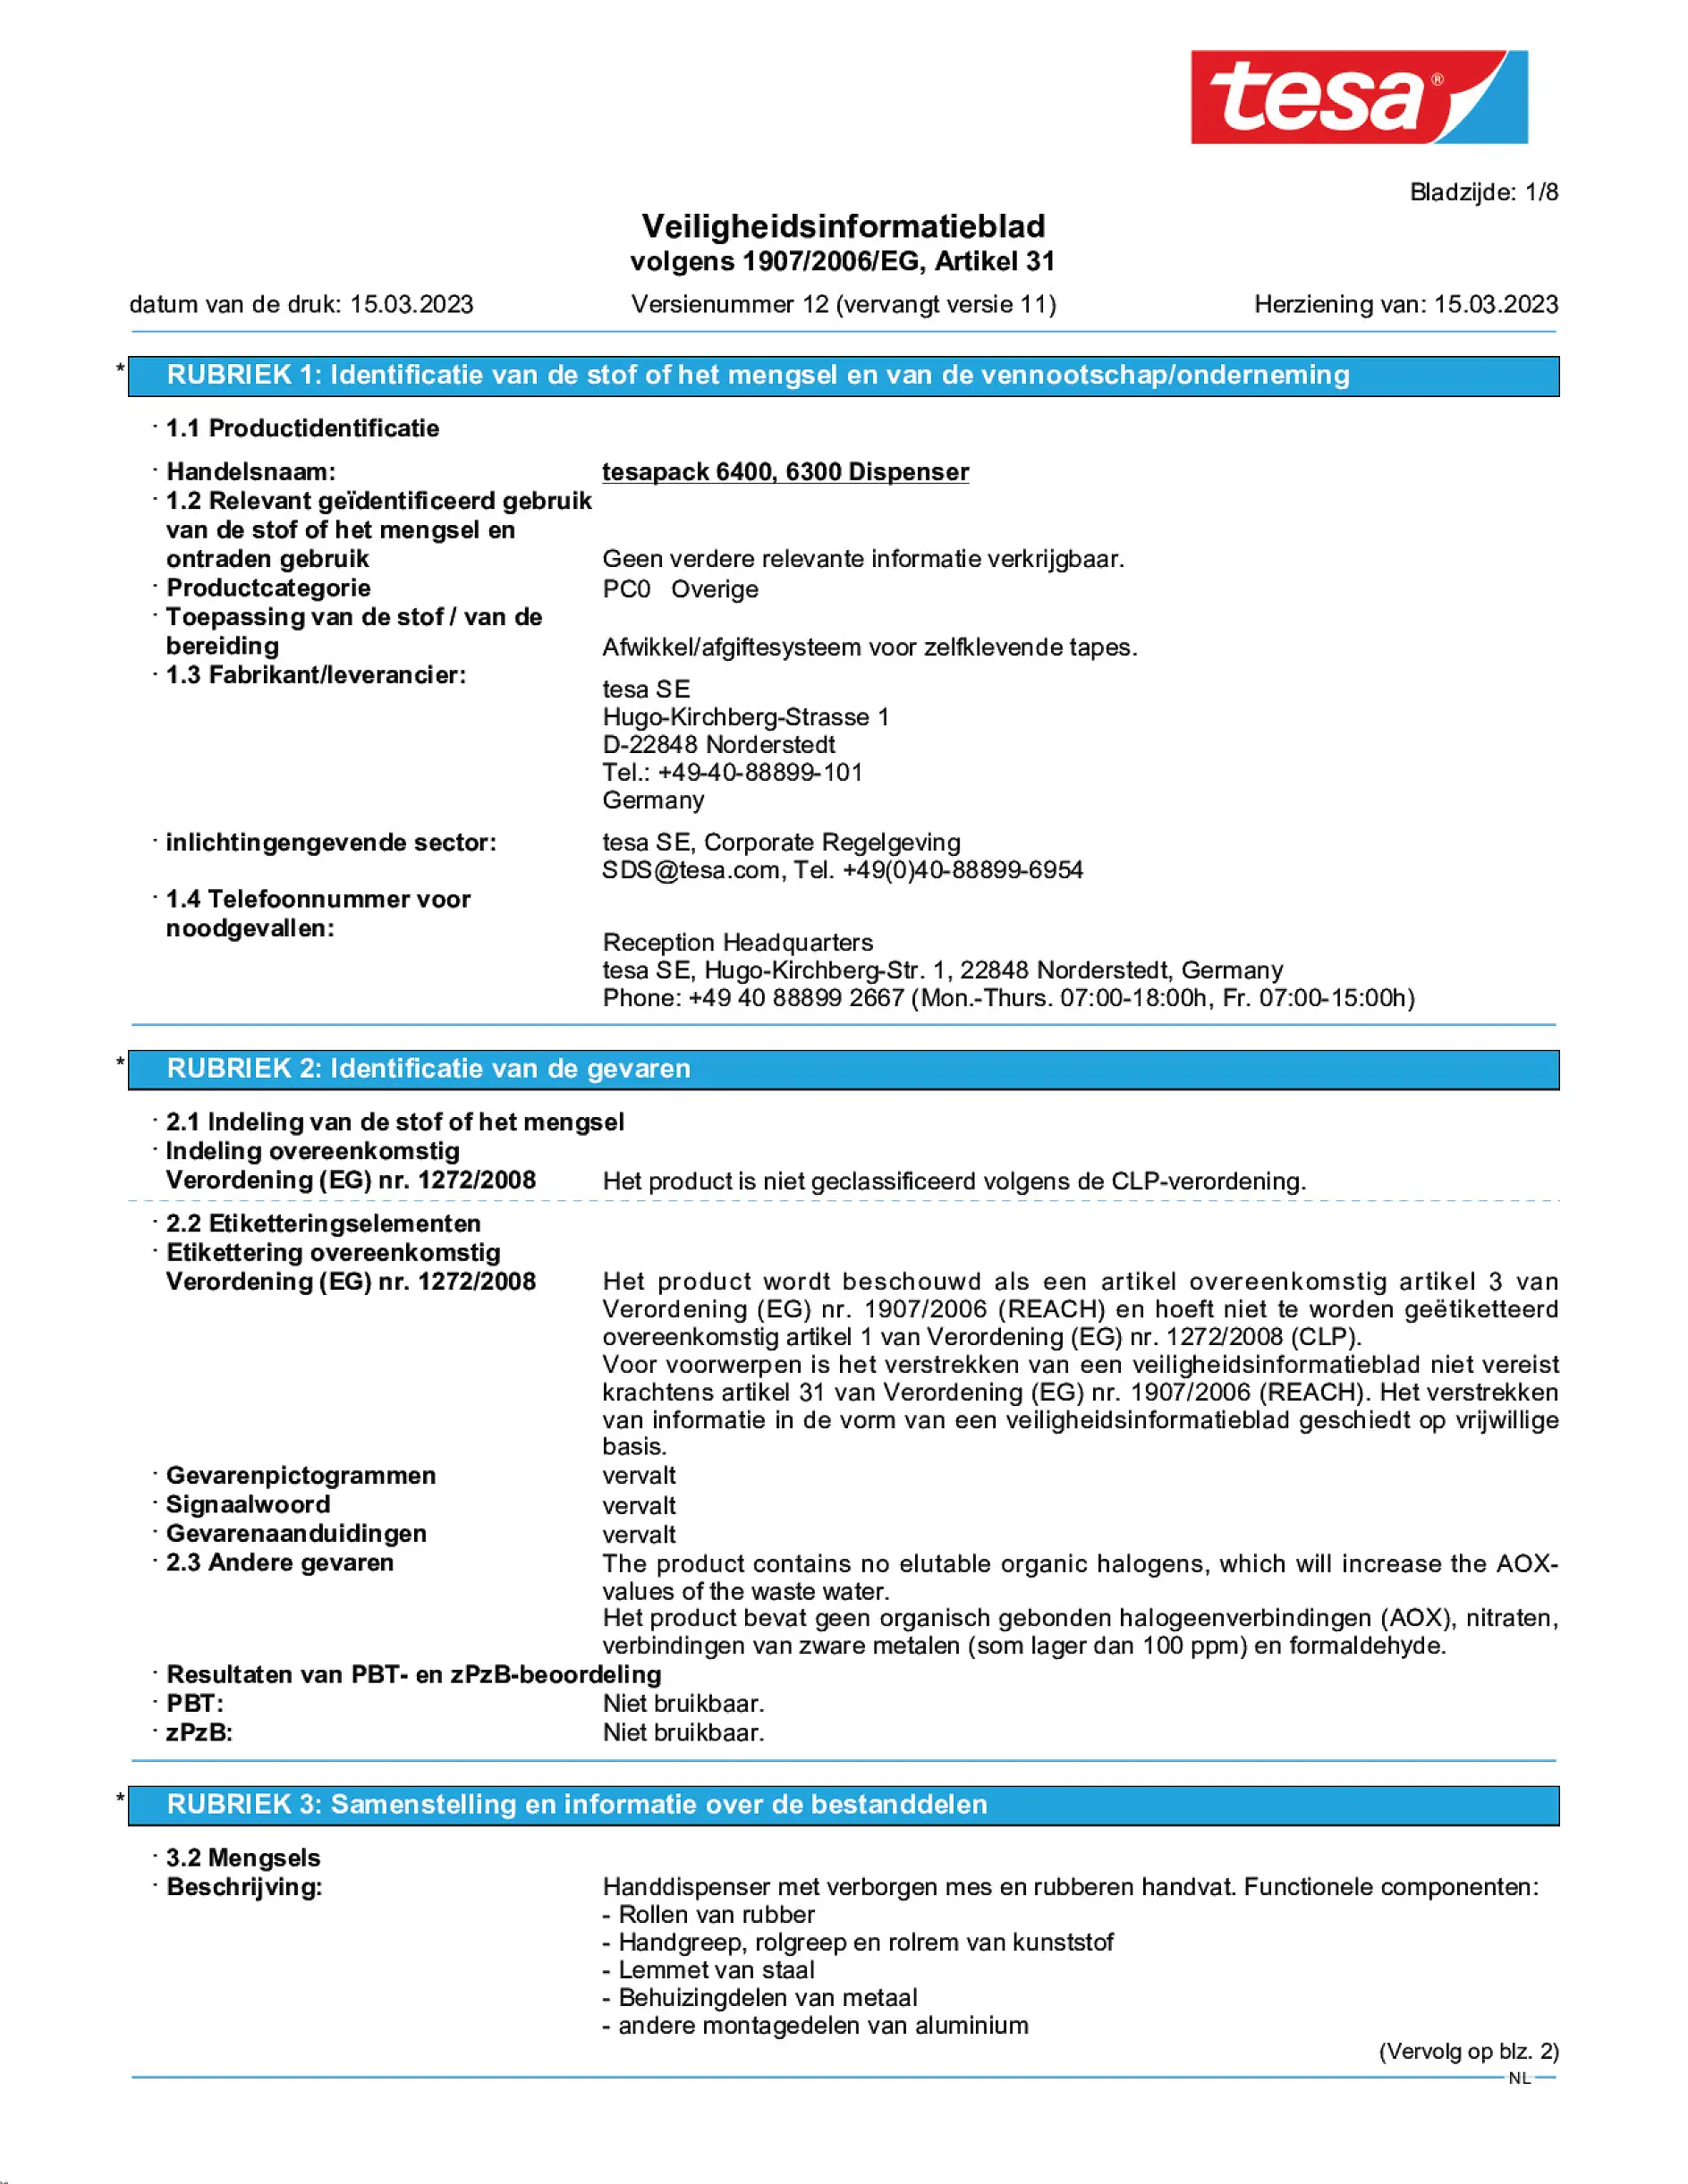 Safety data sheet_tesapack® 06400_nl-NL_v12